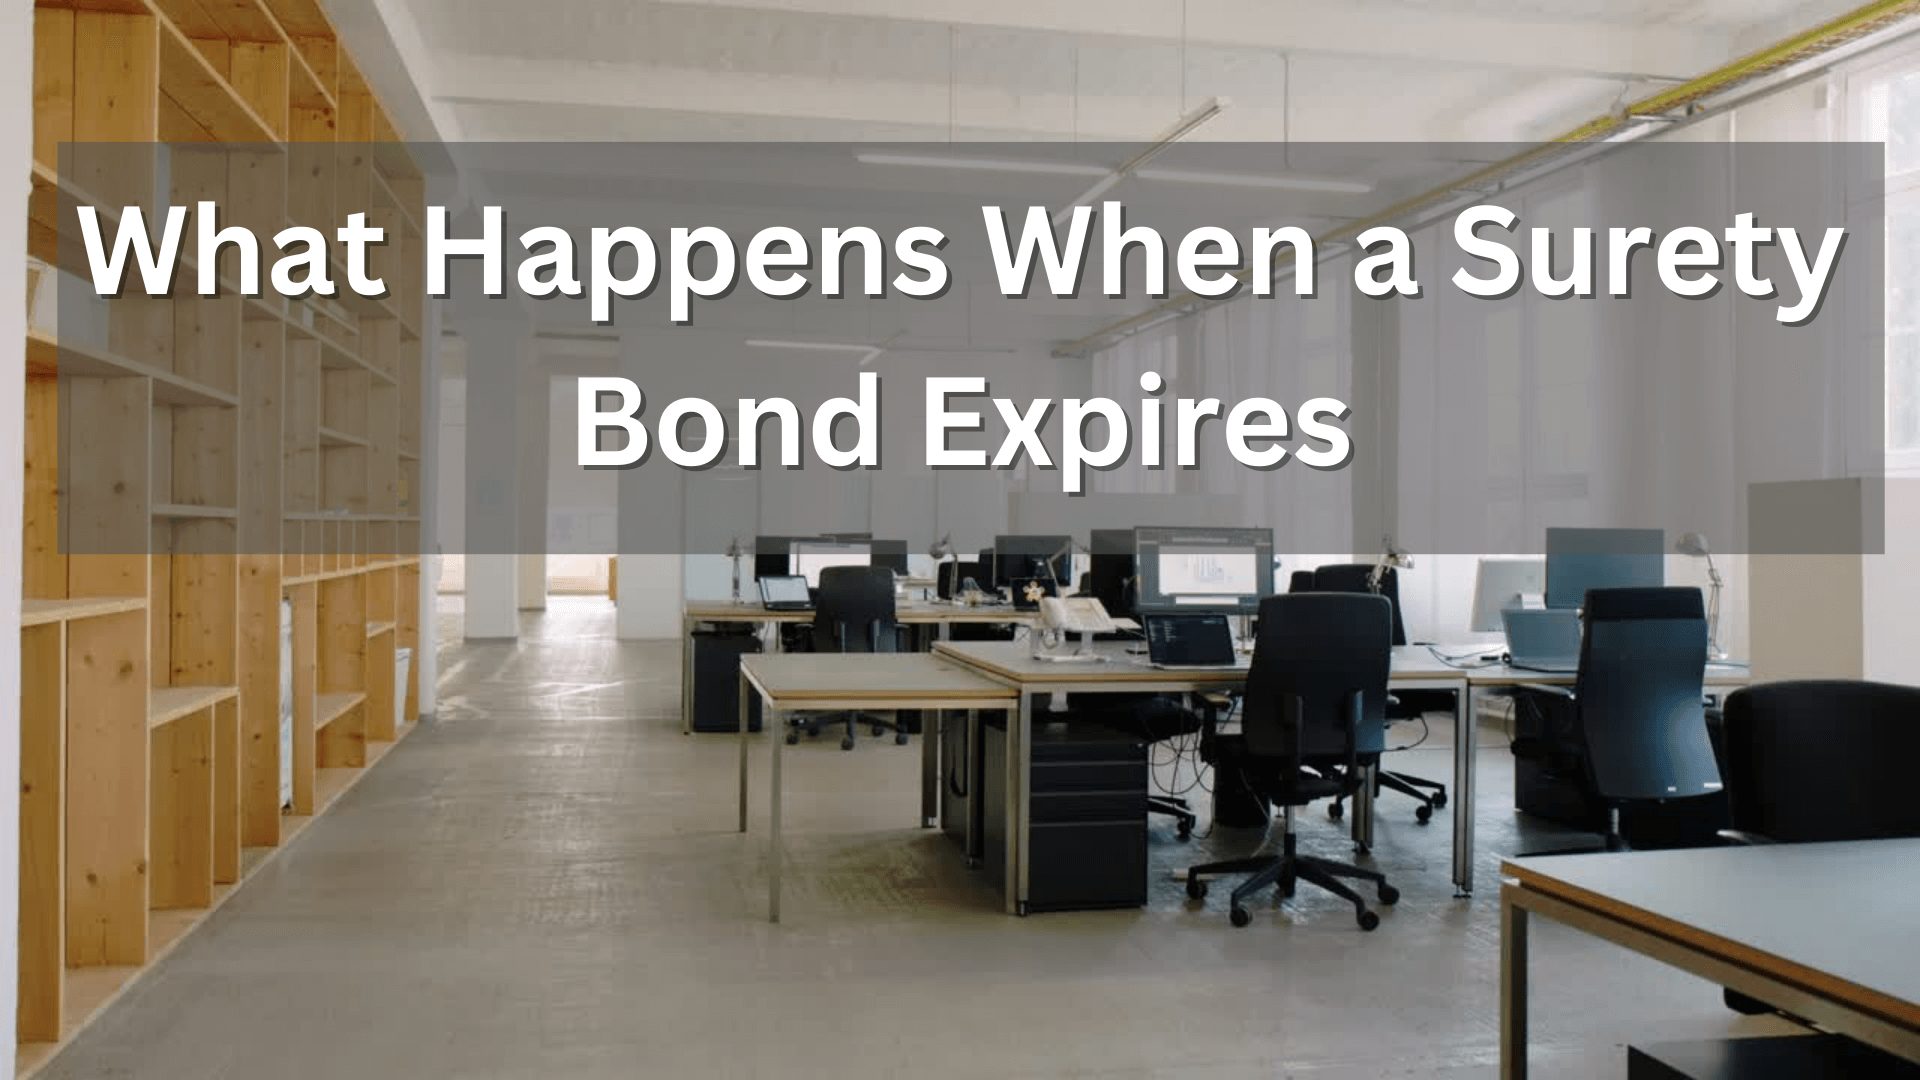 Surety Bonds- What Happens When a Surety Bond Expires